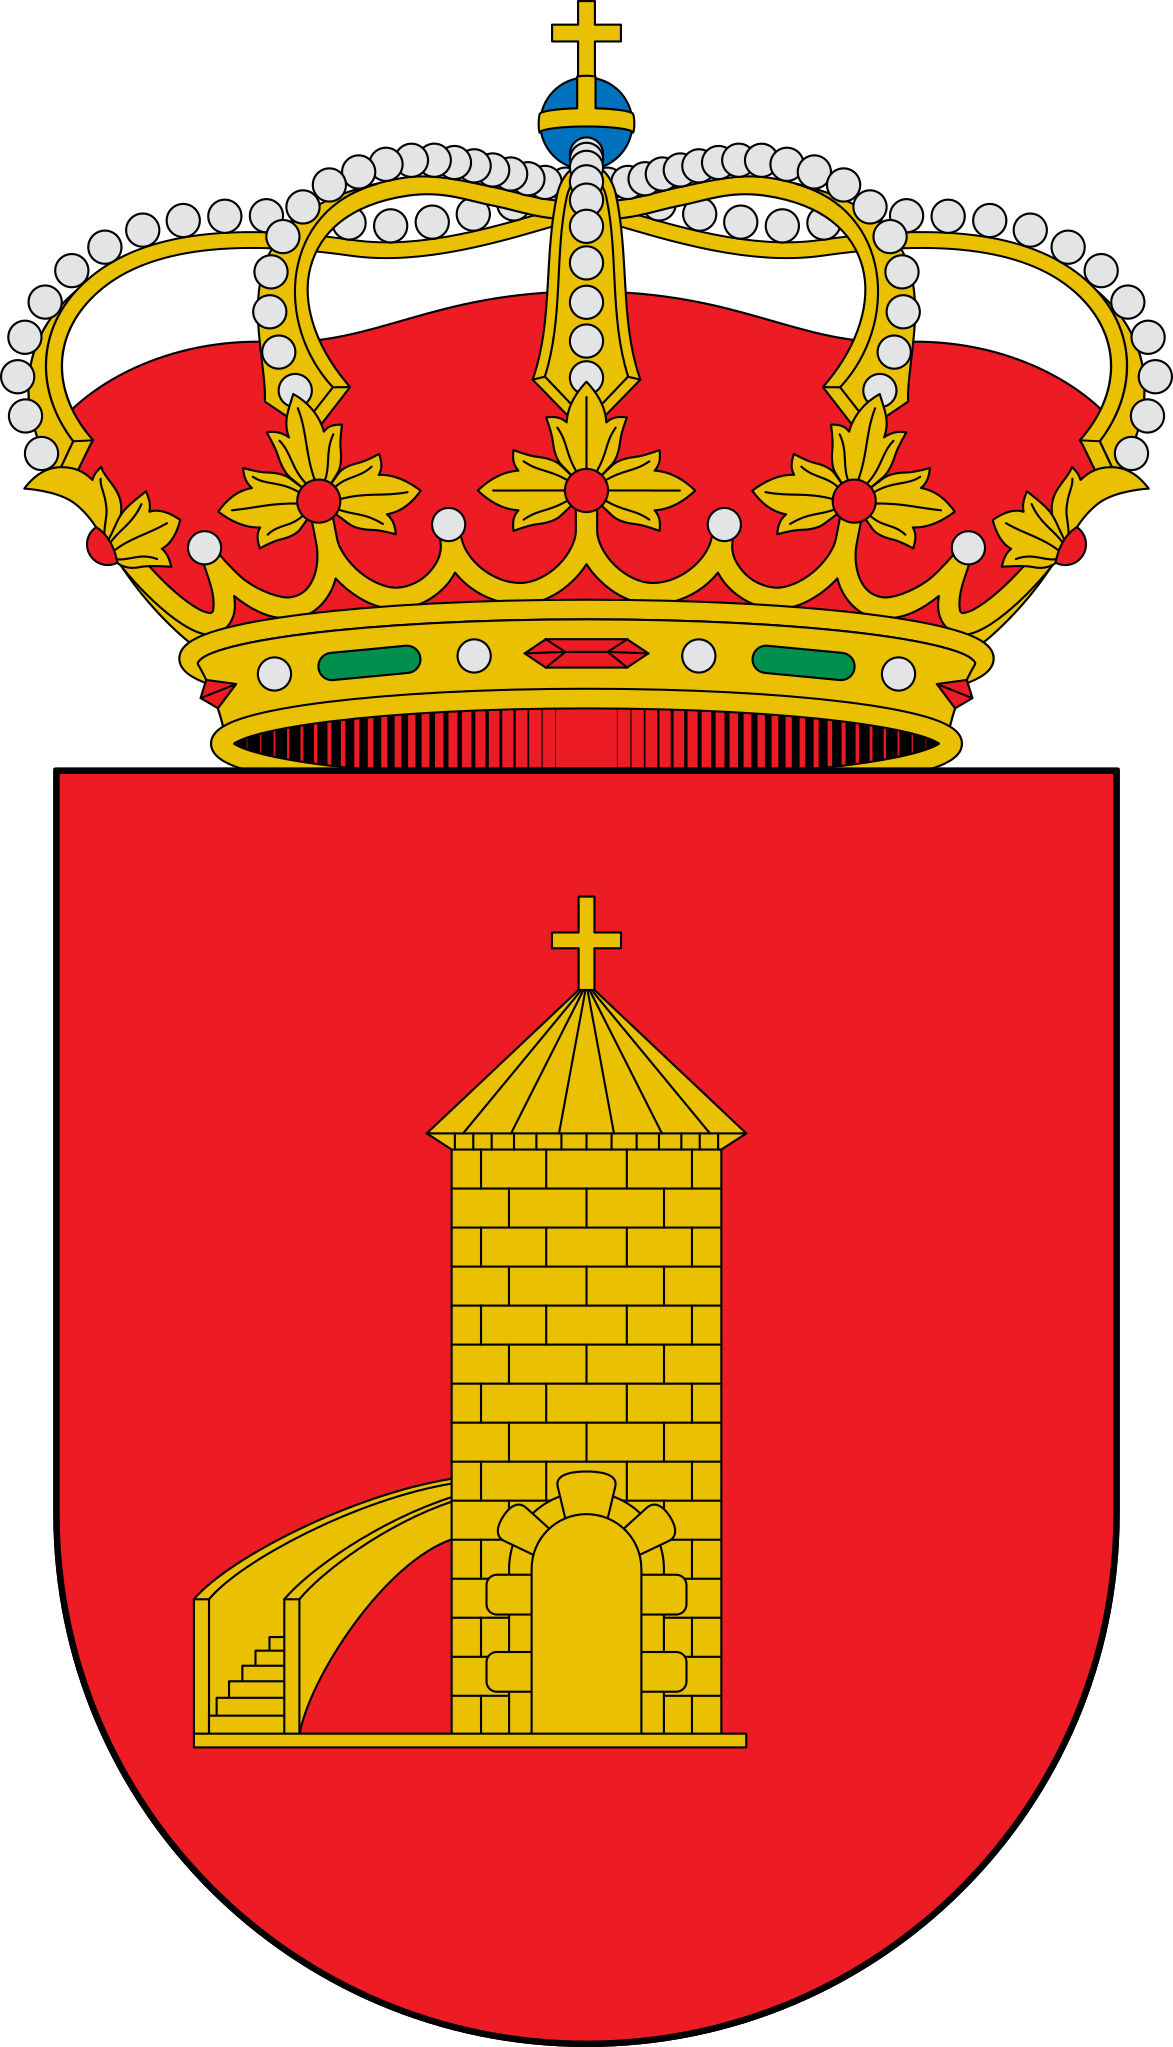 Escudo_de_Cabañes_de_Esgueva_(Burgos).svg